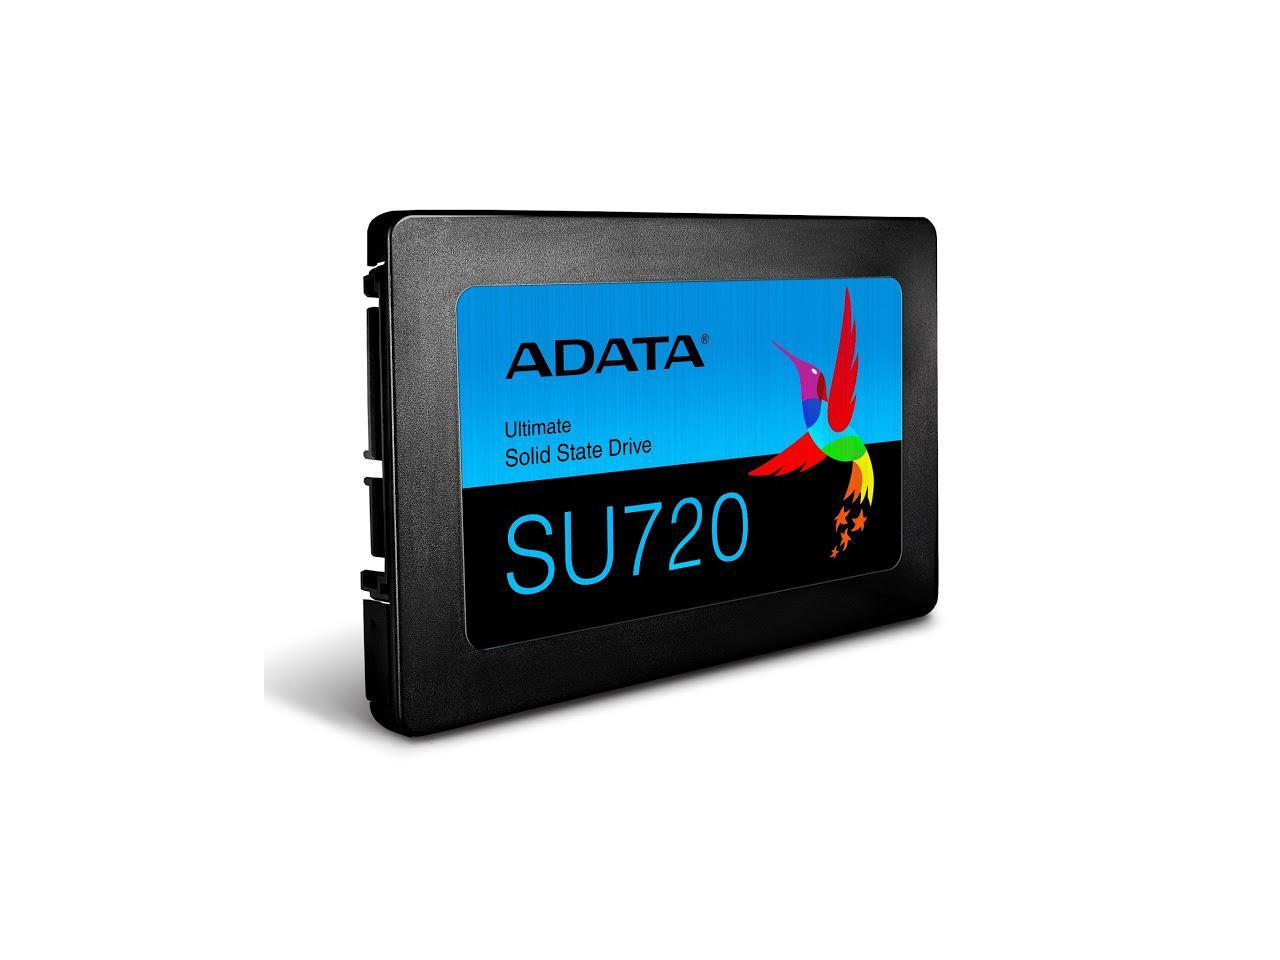 500GB AData SU720 2.5" SSD + $5 GC @Newegg $48